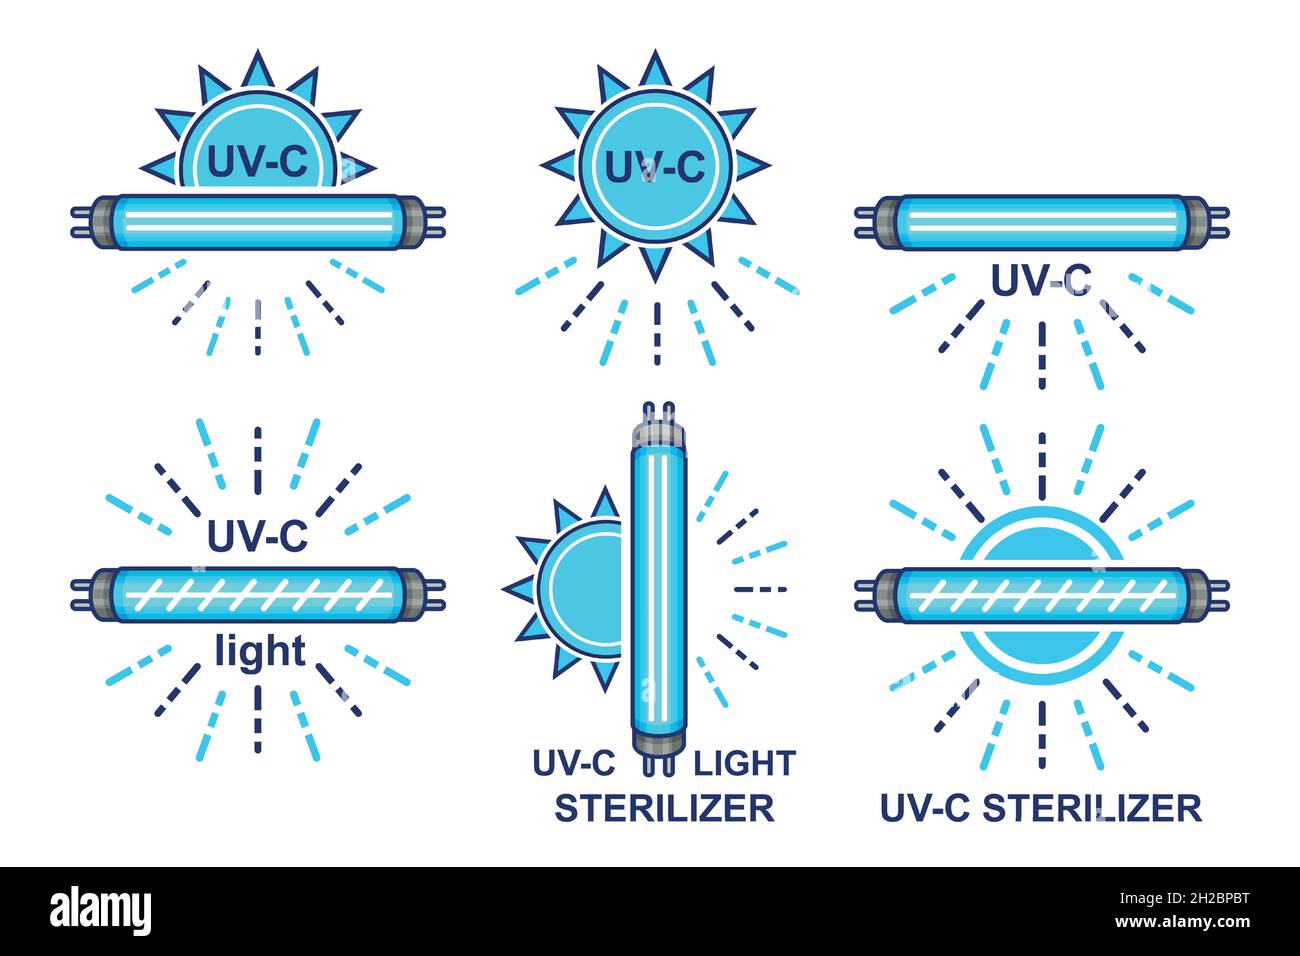 UV-Desinfektionslampe, Quarzsterilisatorlampe, Symbolsatz. UVC ultraviolett antibakterielle Sterilisation Strahl desinfizieren Luft Corona Virus Tötungsvektor Stock Vektor